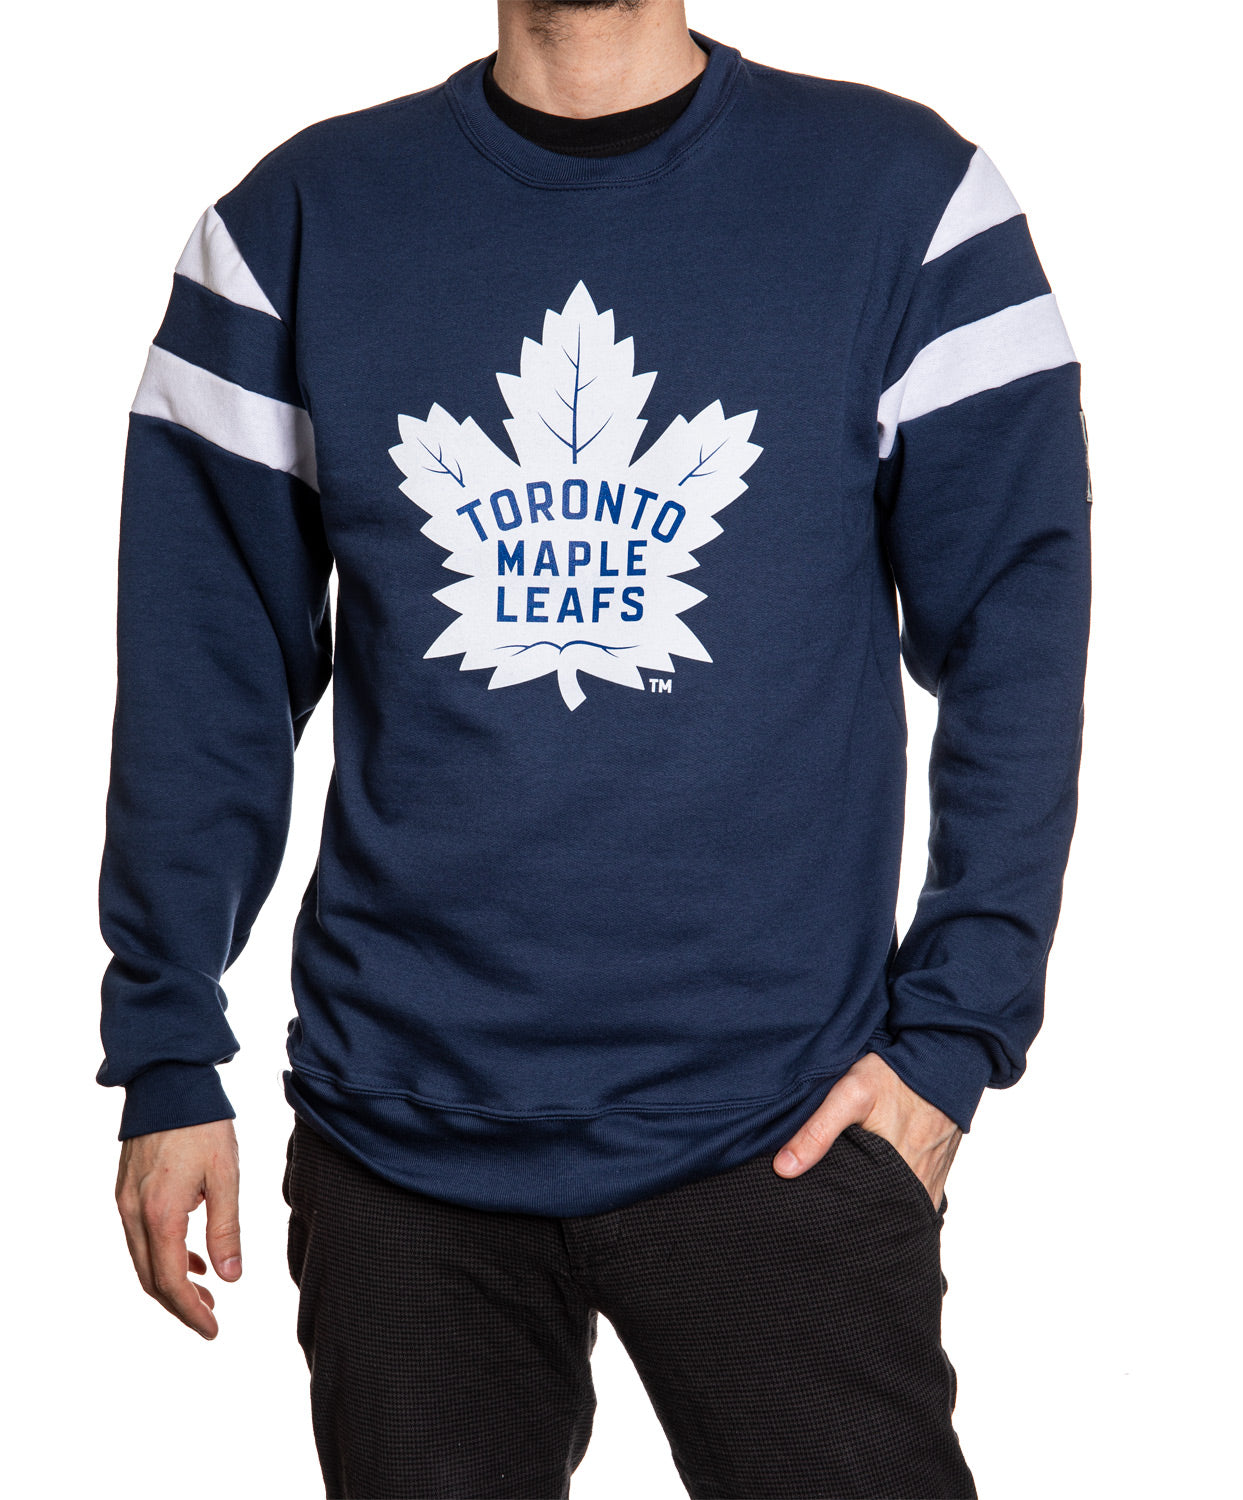 Toronto Maple Leafs Crewneck Sweatshirt - West Breeze Tee